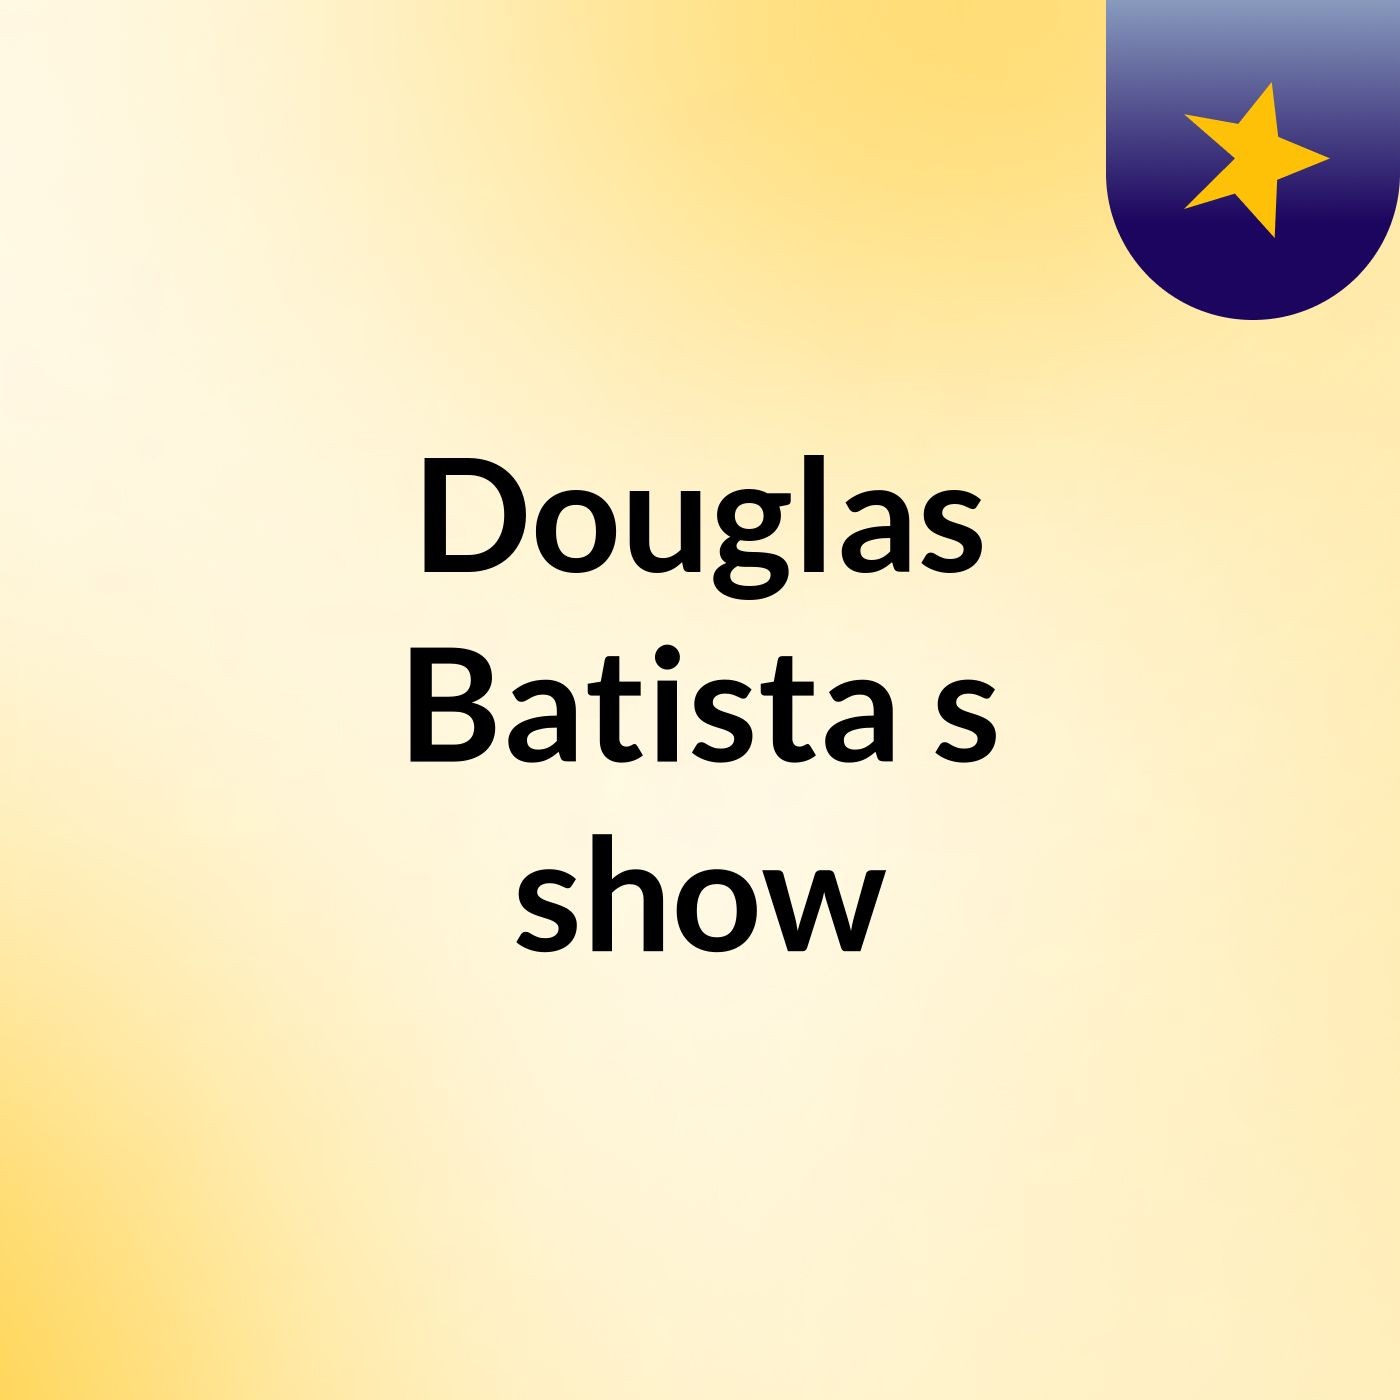 Douglas Batista's show